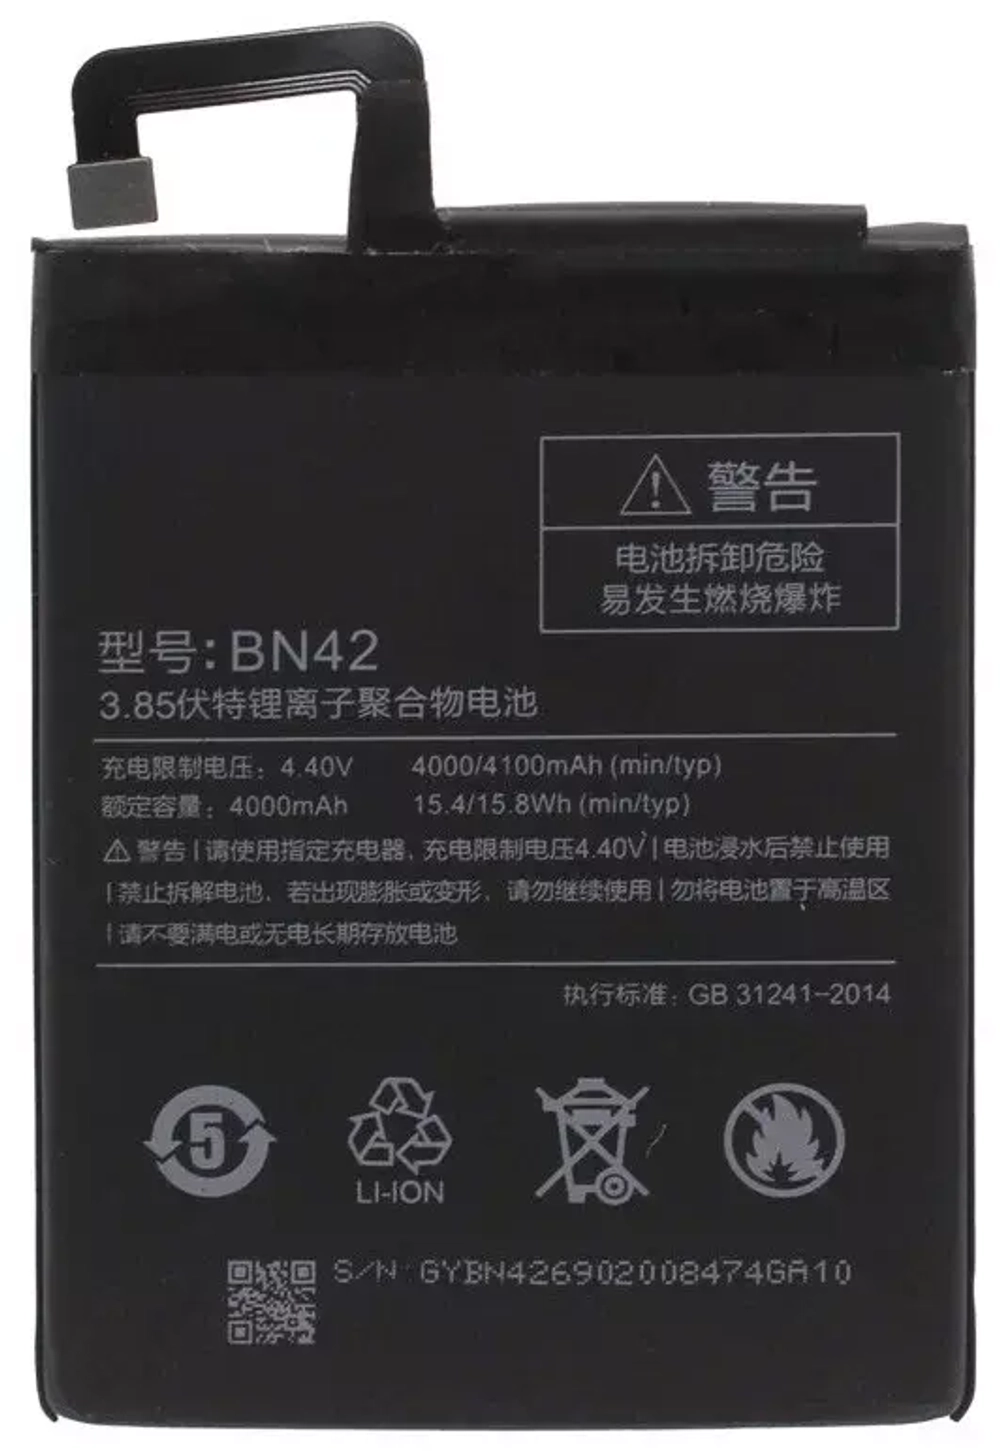 АКБ для Xiaomi BN42 (Redmi 4)